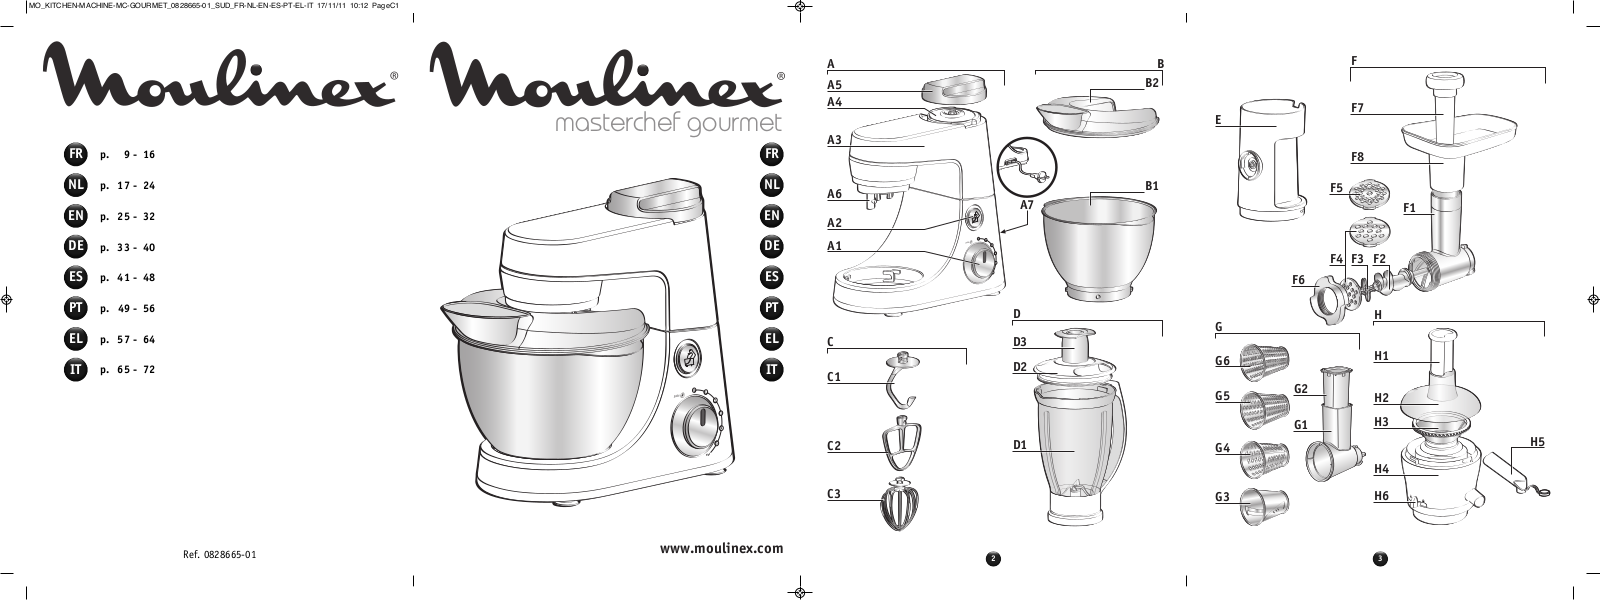 MOULINEX A403G01 User Manual